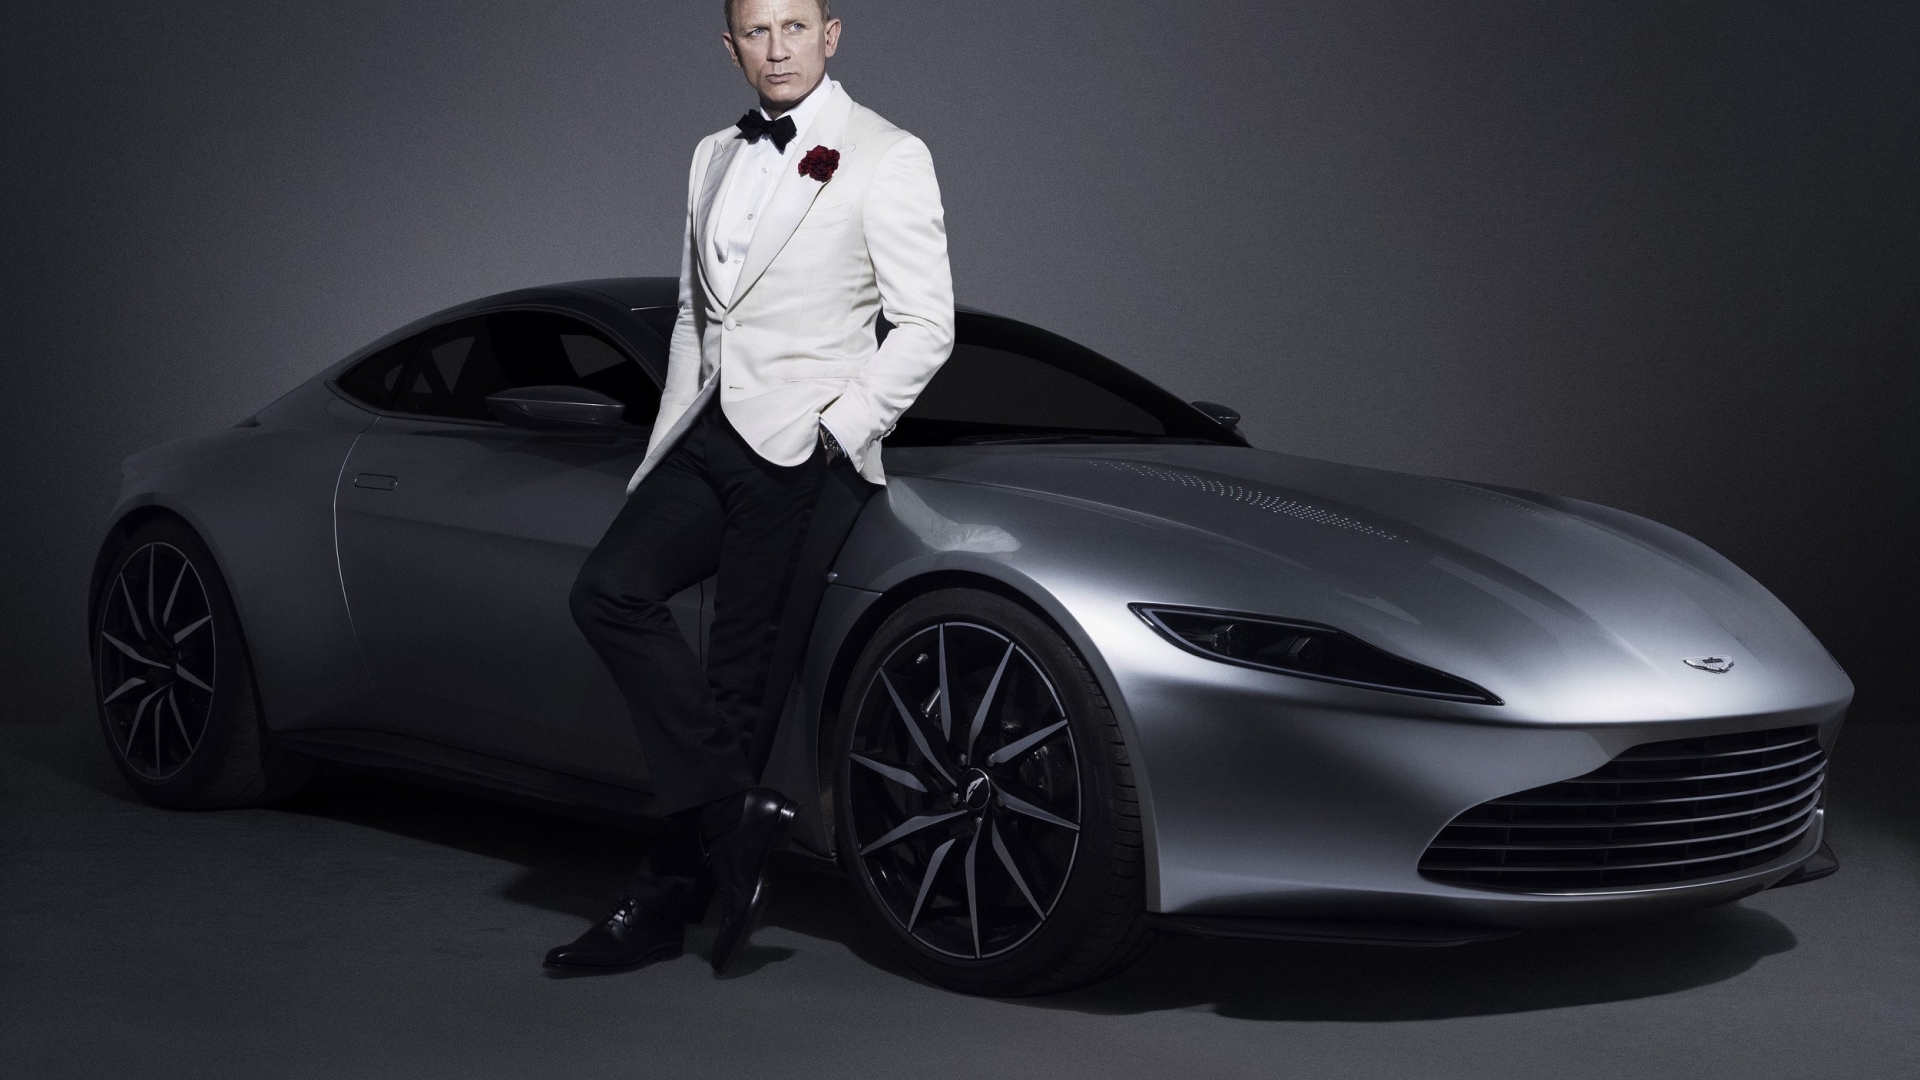 1920x1080 Daniel Craig 007 James Bond Aston Martin Car Photoshoot 1080P  Laptop Full HD Wallpaper, HD Celebrities 4K Wallpapers, Images, Photos and  Background - Wallpapers Den